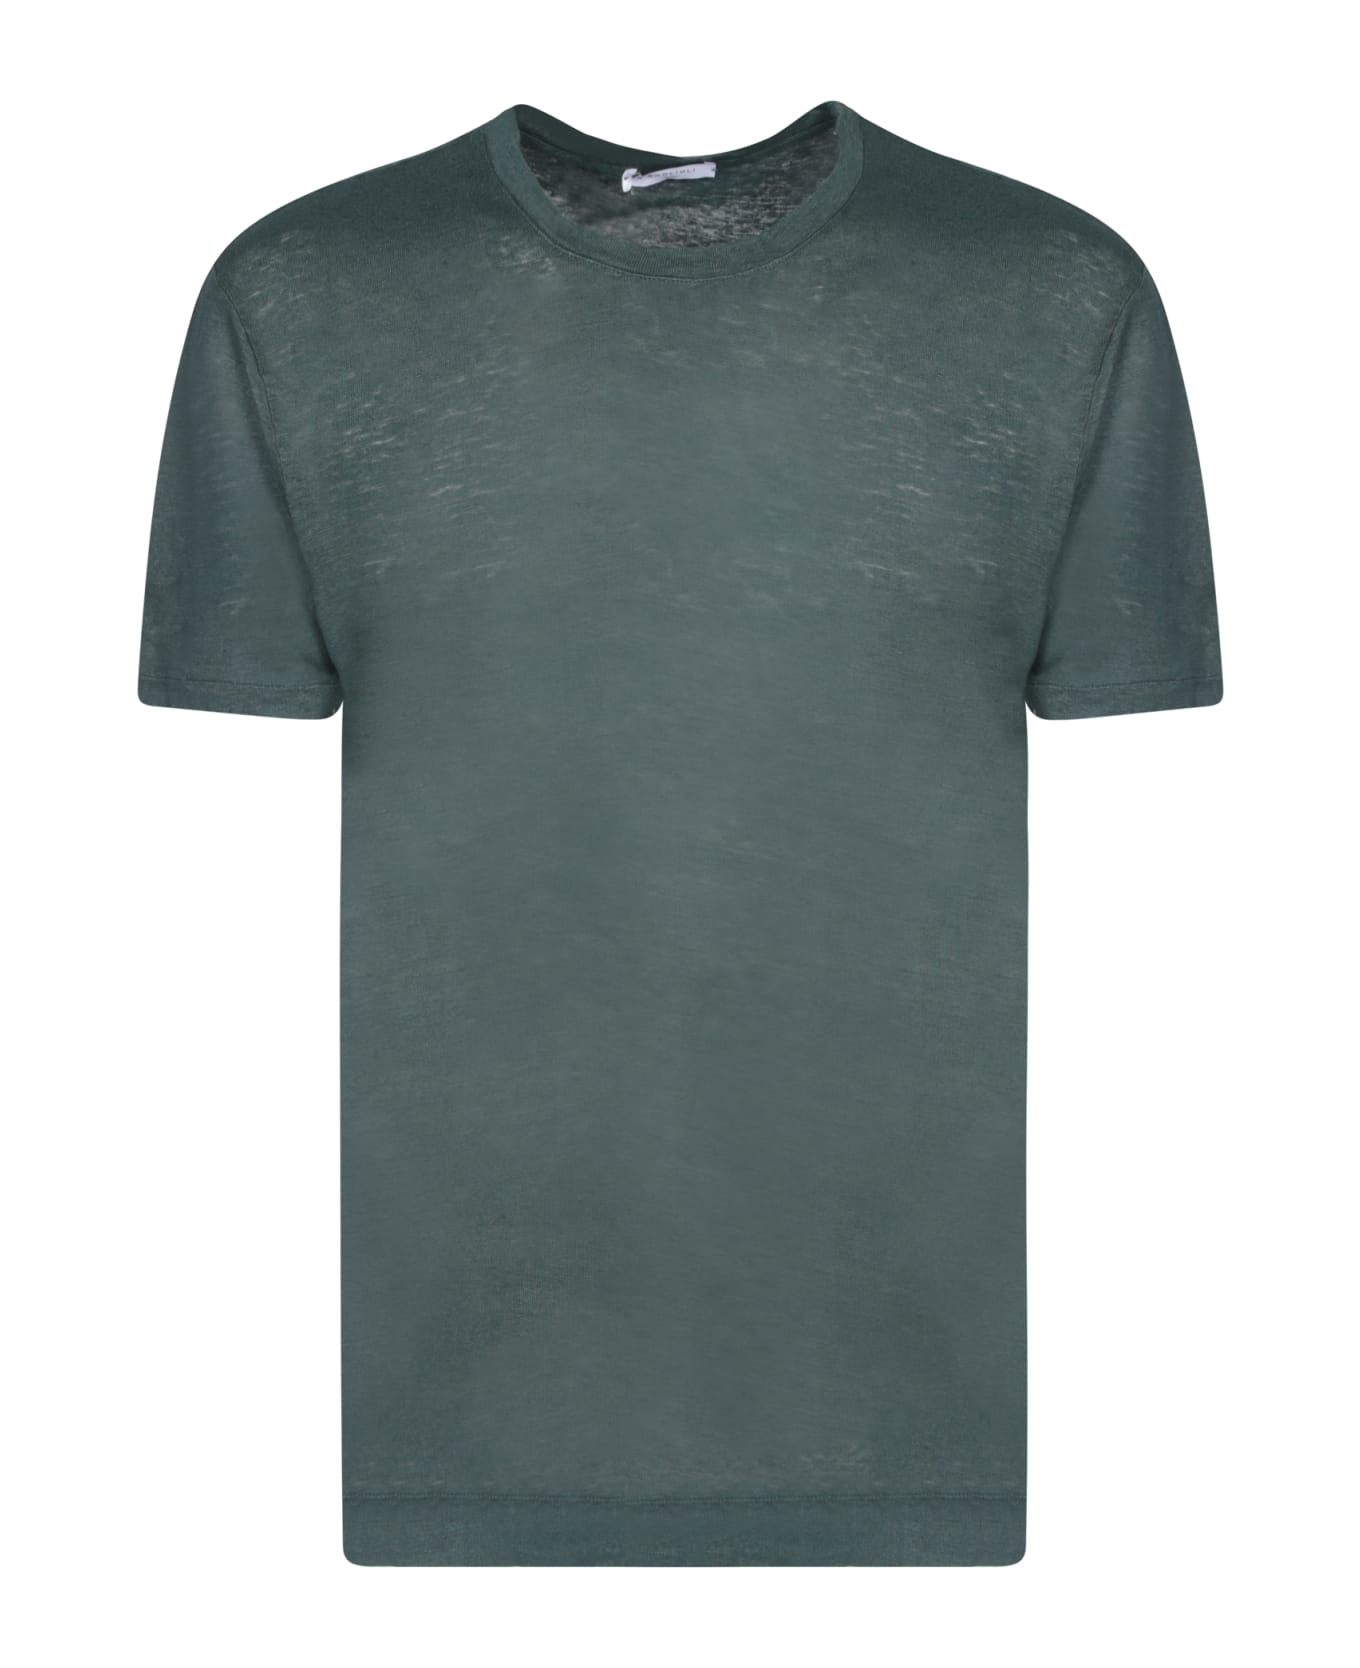 Boglioli Sage Green T-shirt - Green